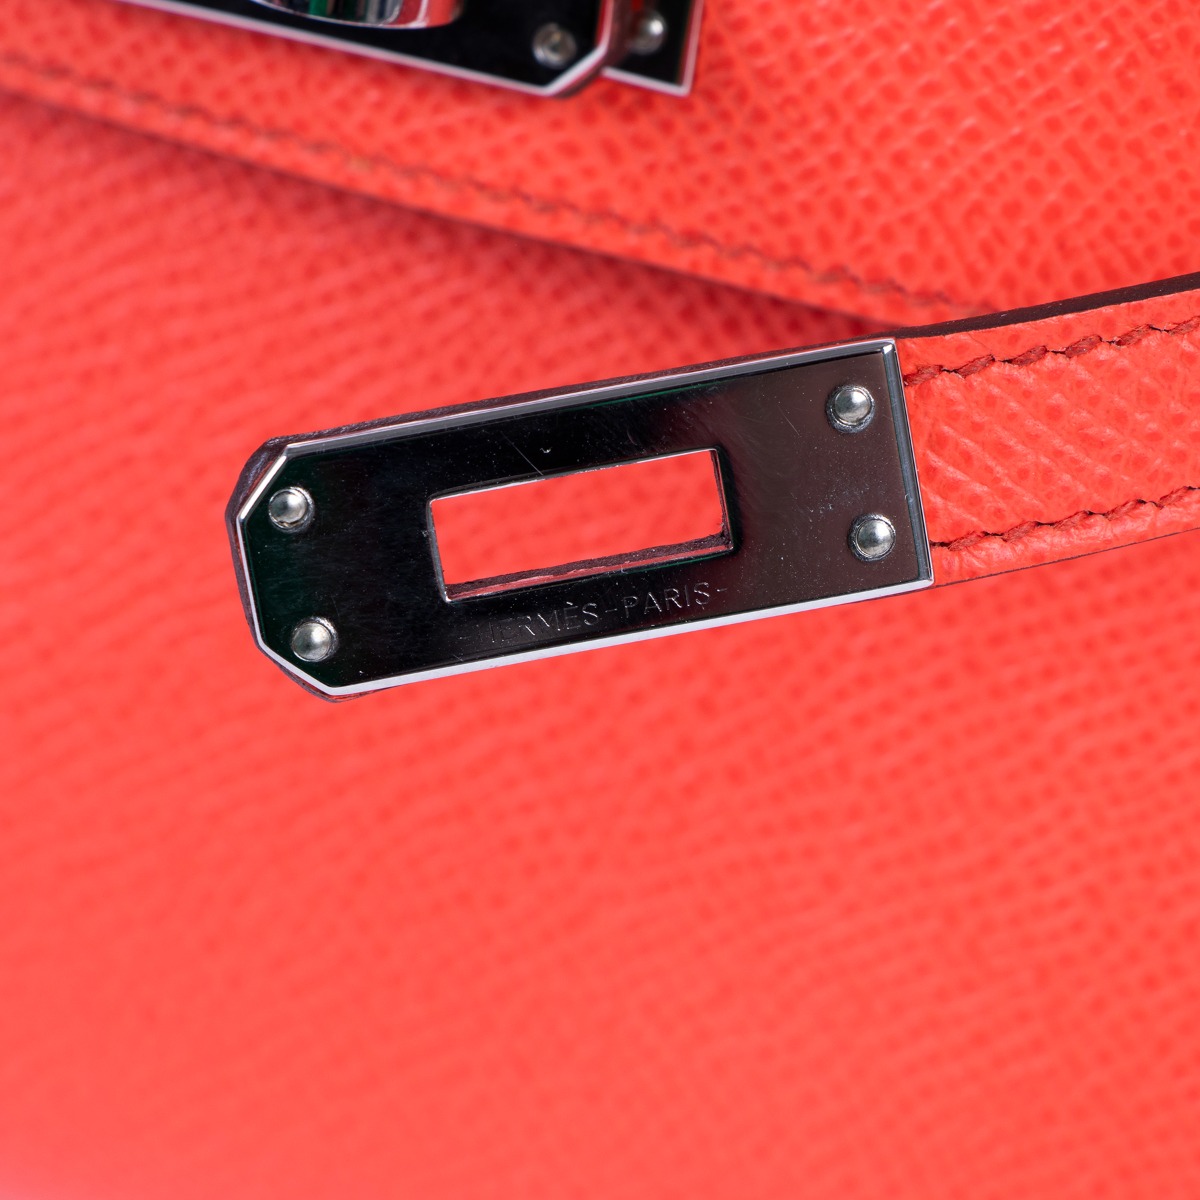 Women :: Bags :: Hermès Mini Kelly 20 Epsom Rose Azalee with Palladium  Hardware - The Real Luxury